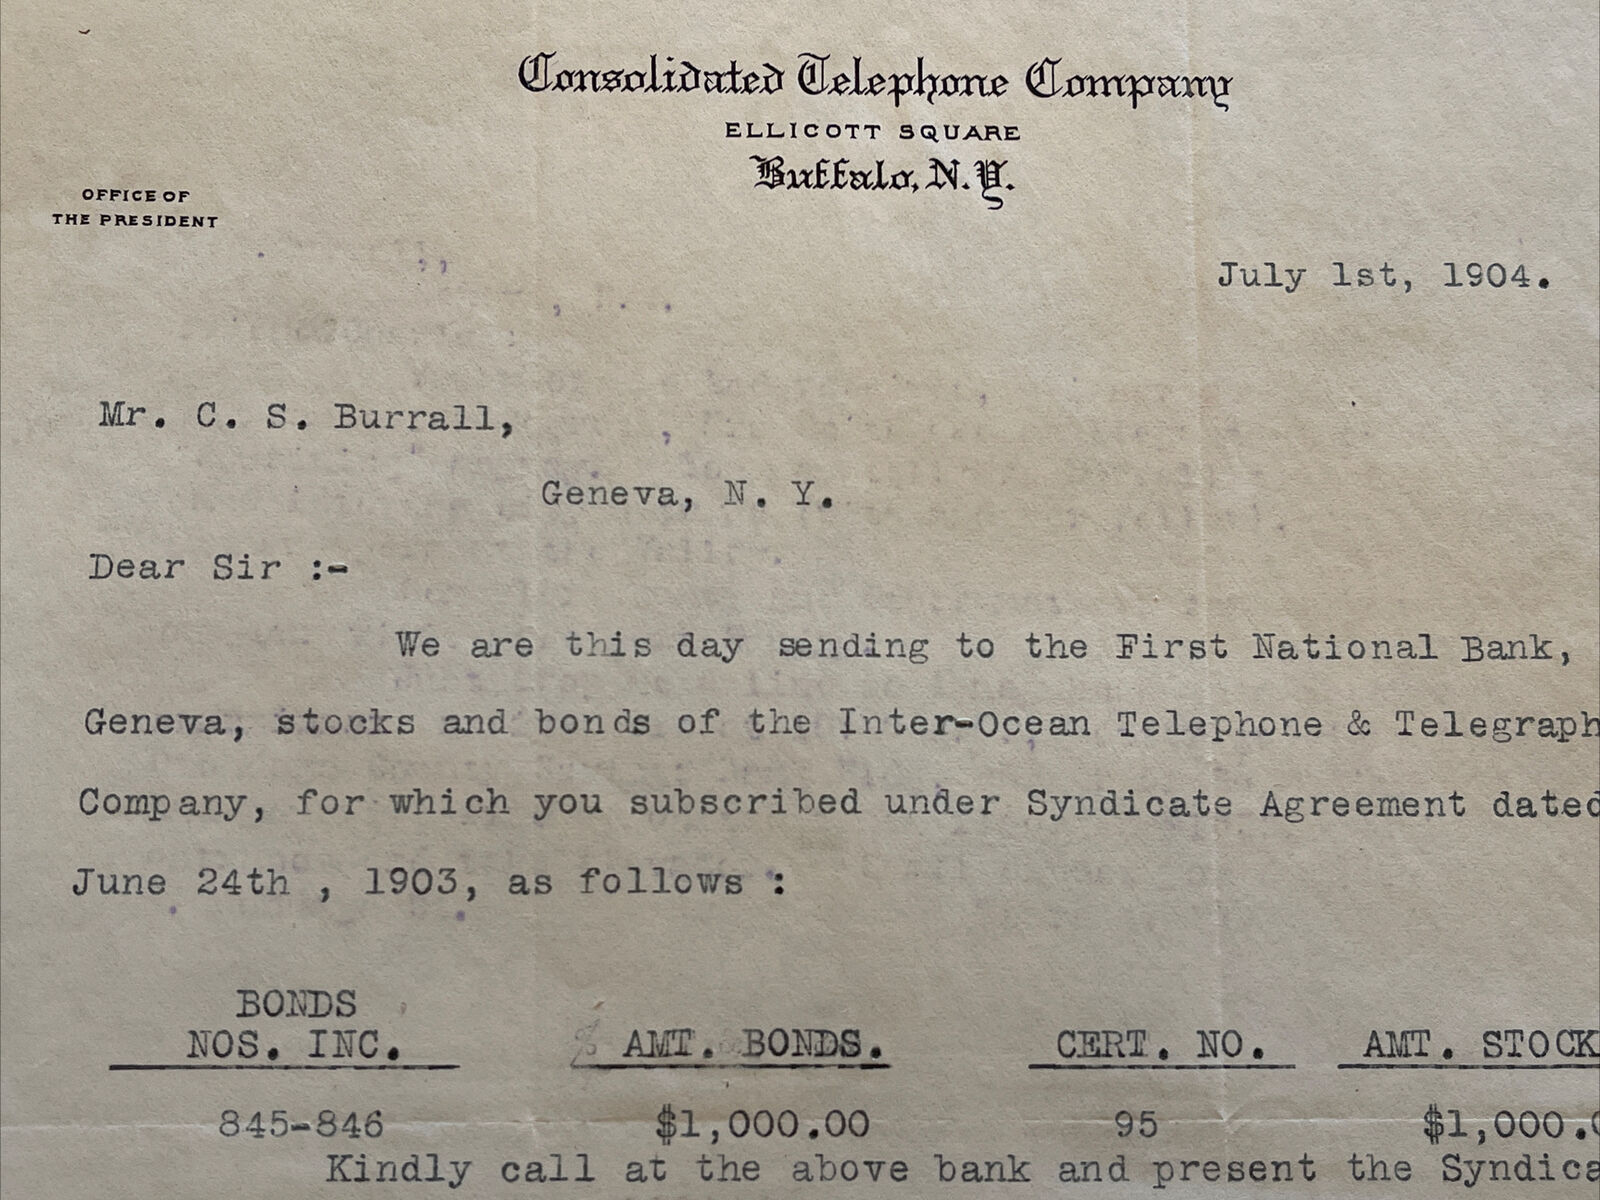 1904 Consolidated Telephone Company Buffalo New York Original Letterhead Signed